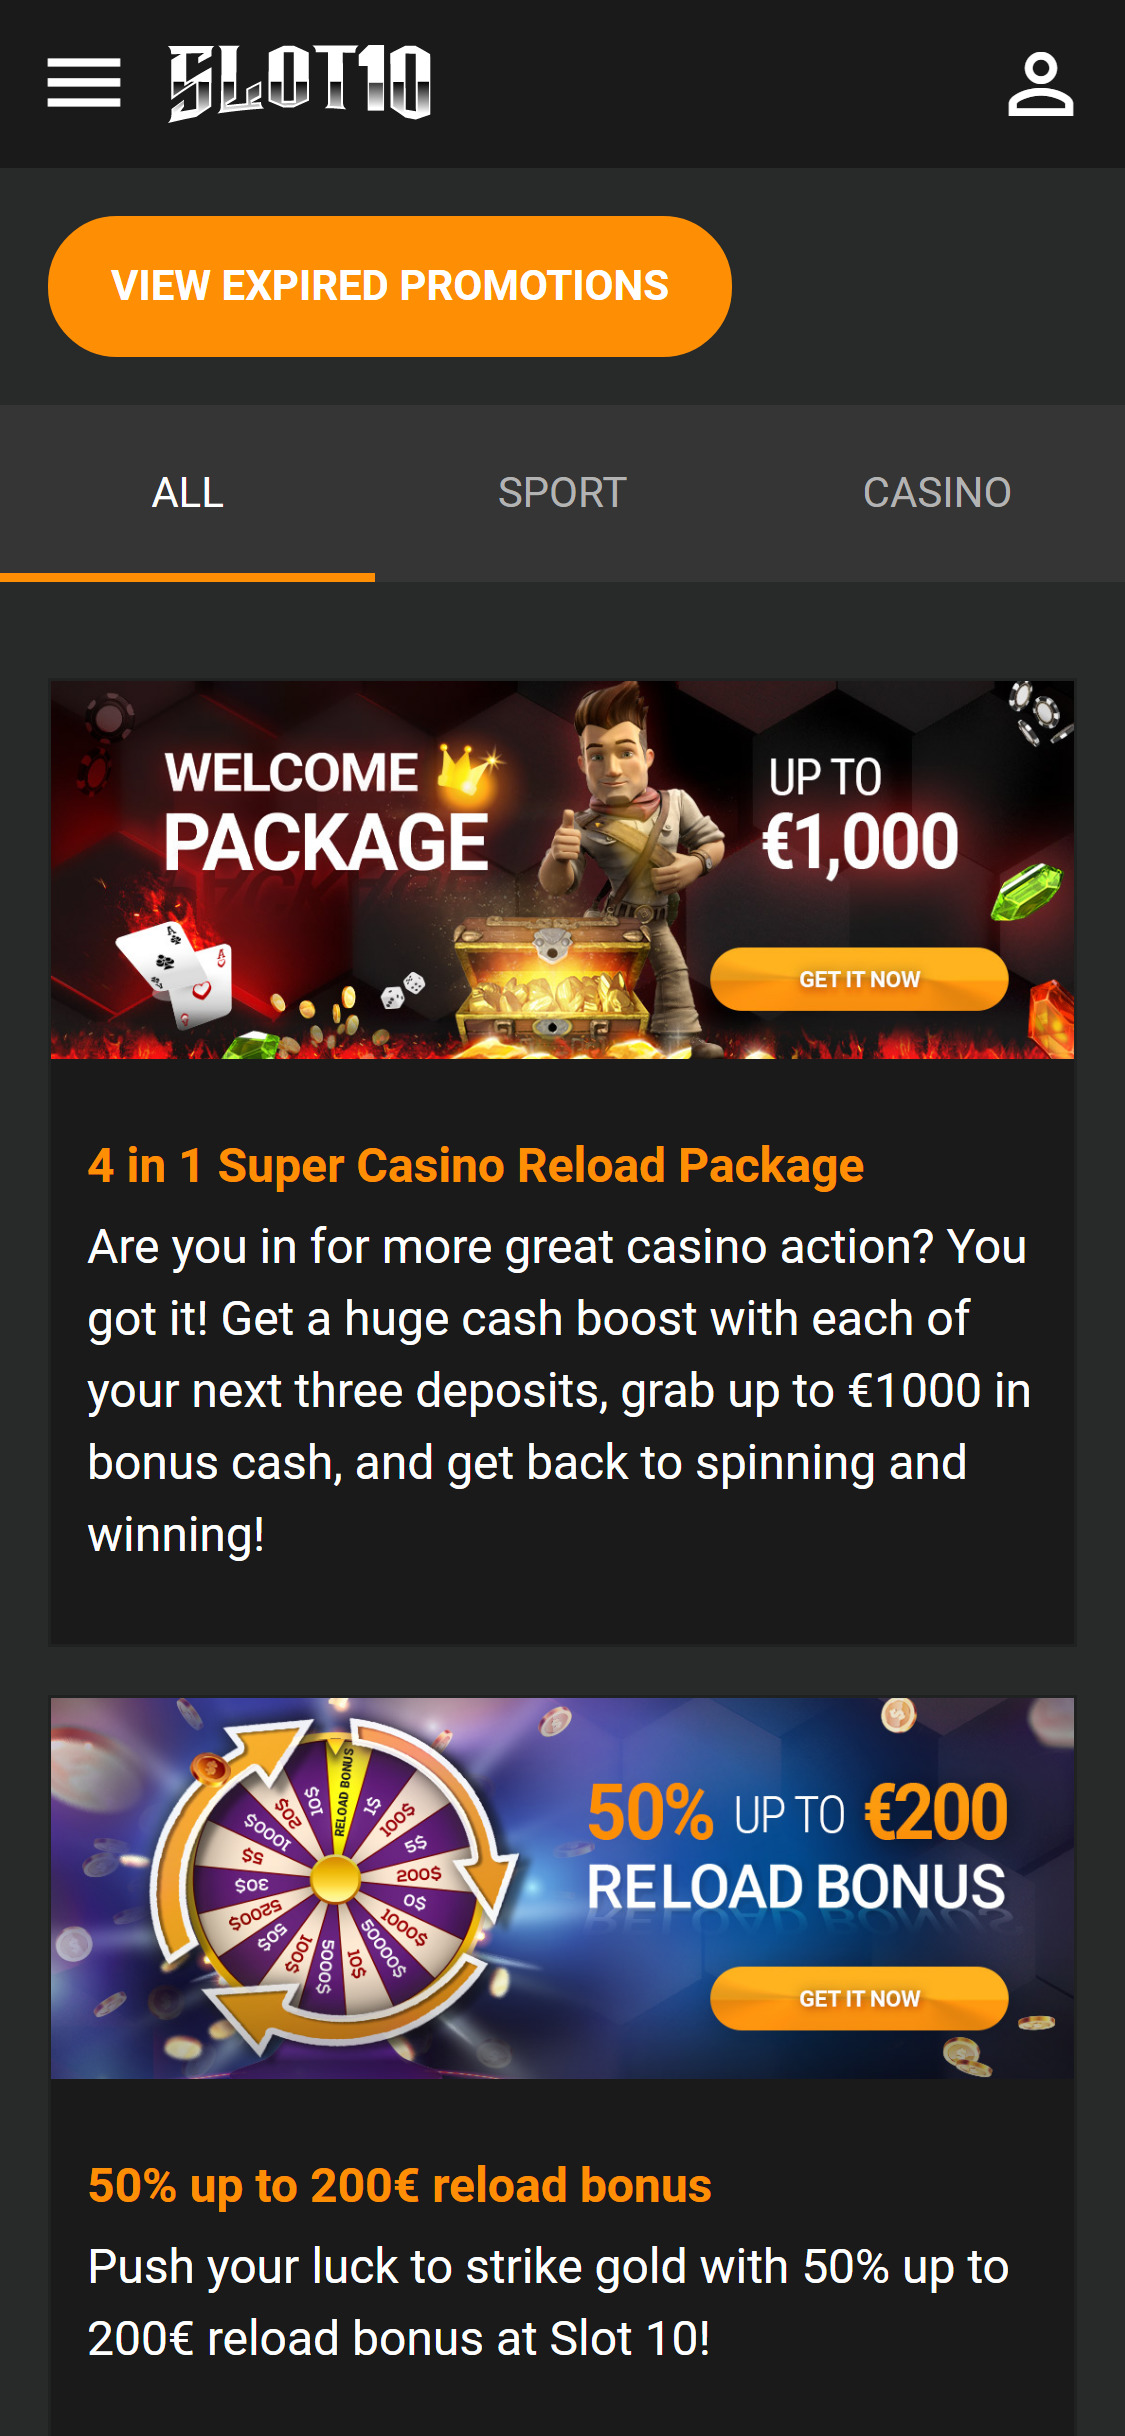 Slot 10 Casino Mobile No Deposit Bonus Review